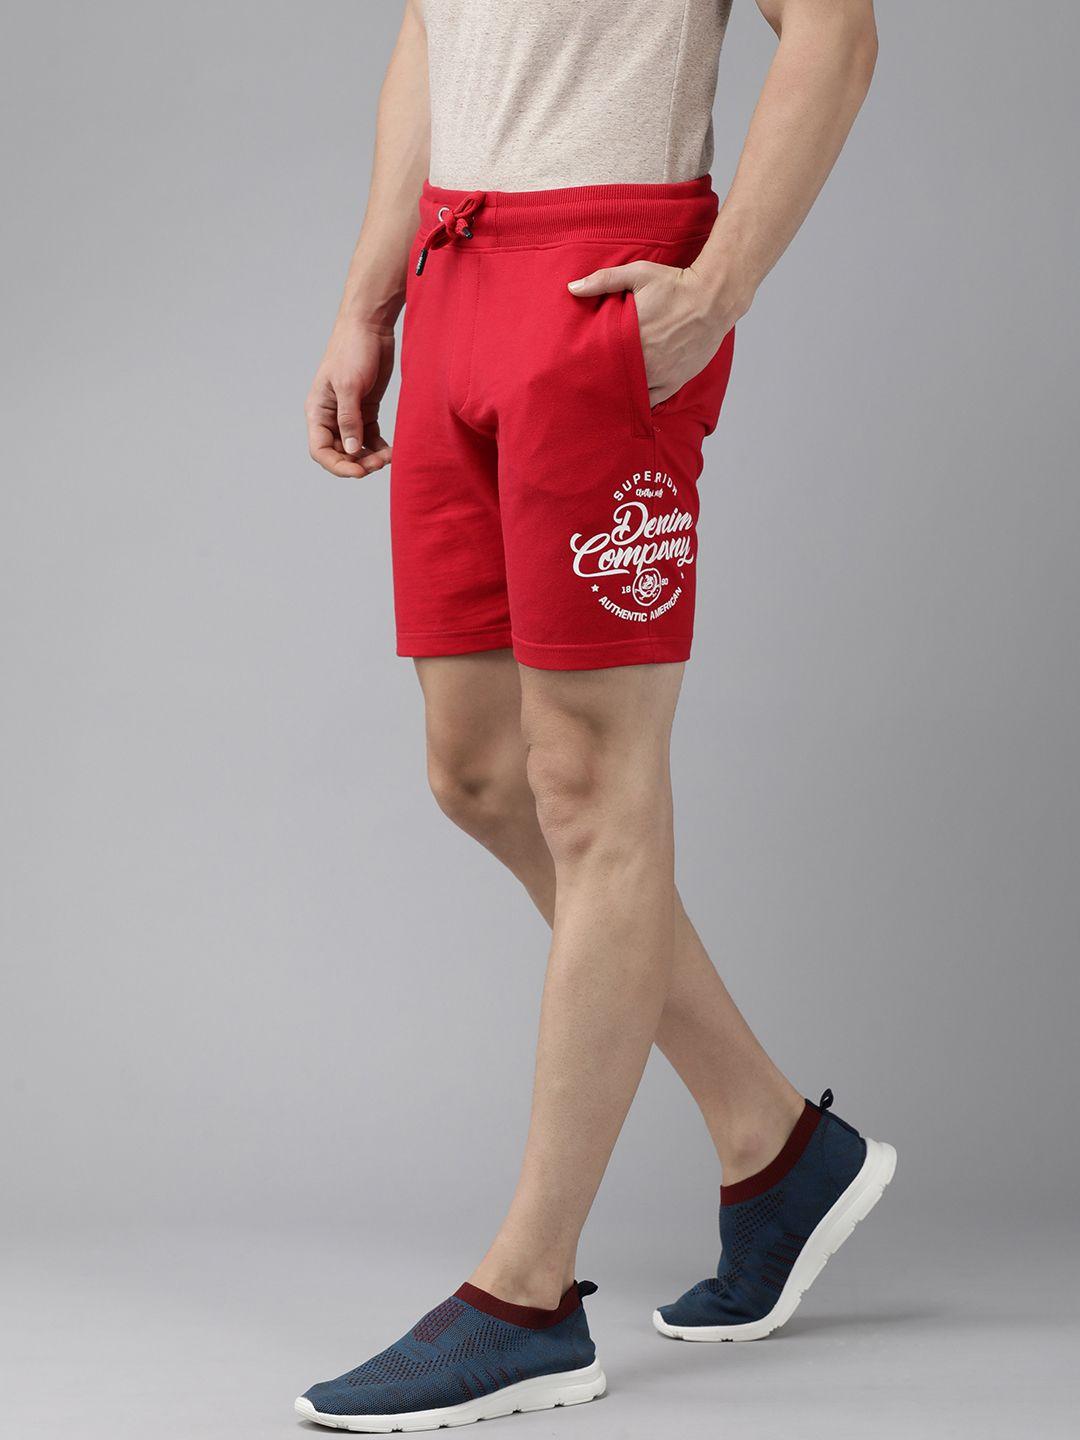 u-s-polo-assn-denim-co-men-red-brand-logo-printed-shorts